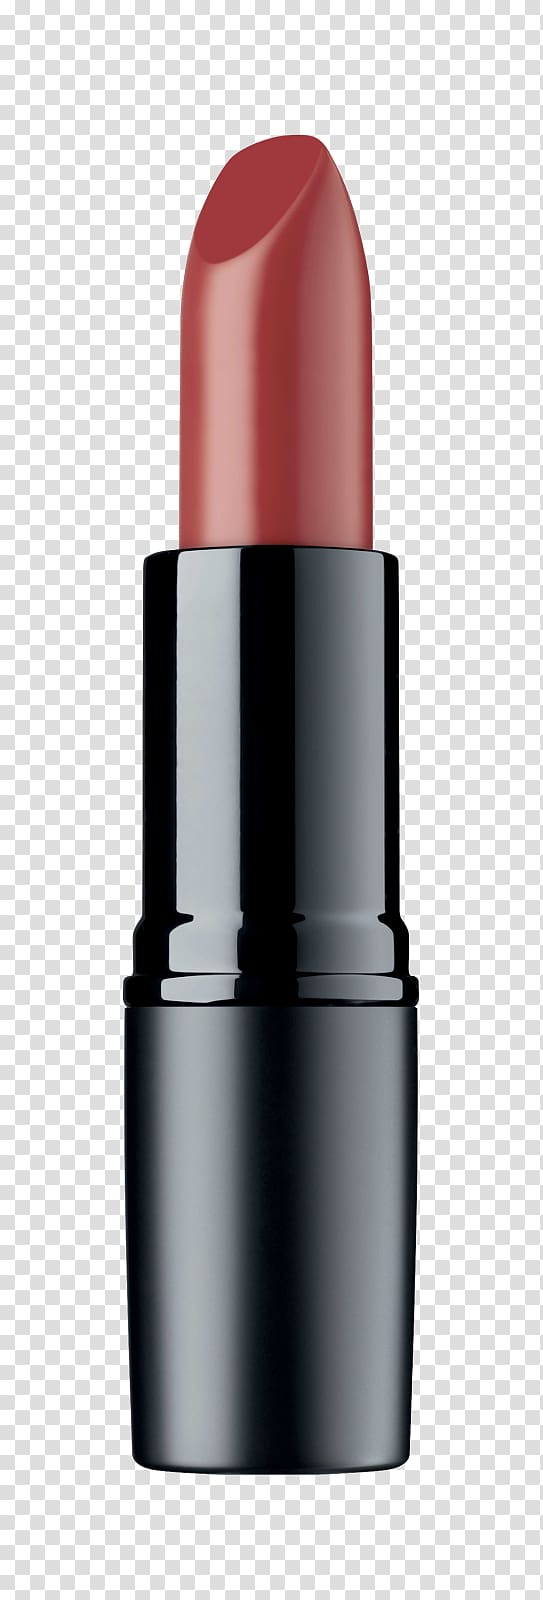 Lipstick Pomade Cosmetics Make-up, Artdeco transparent background PNG clipart